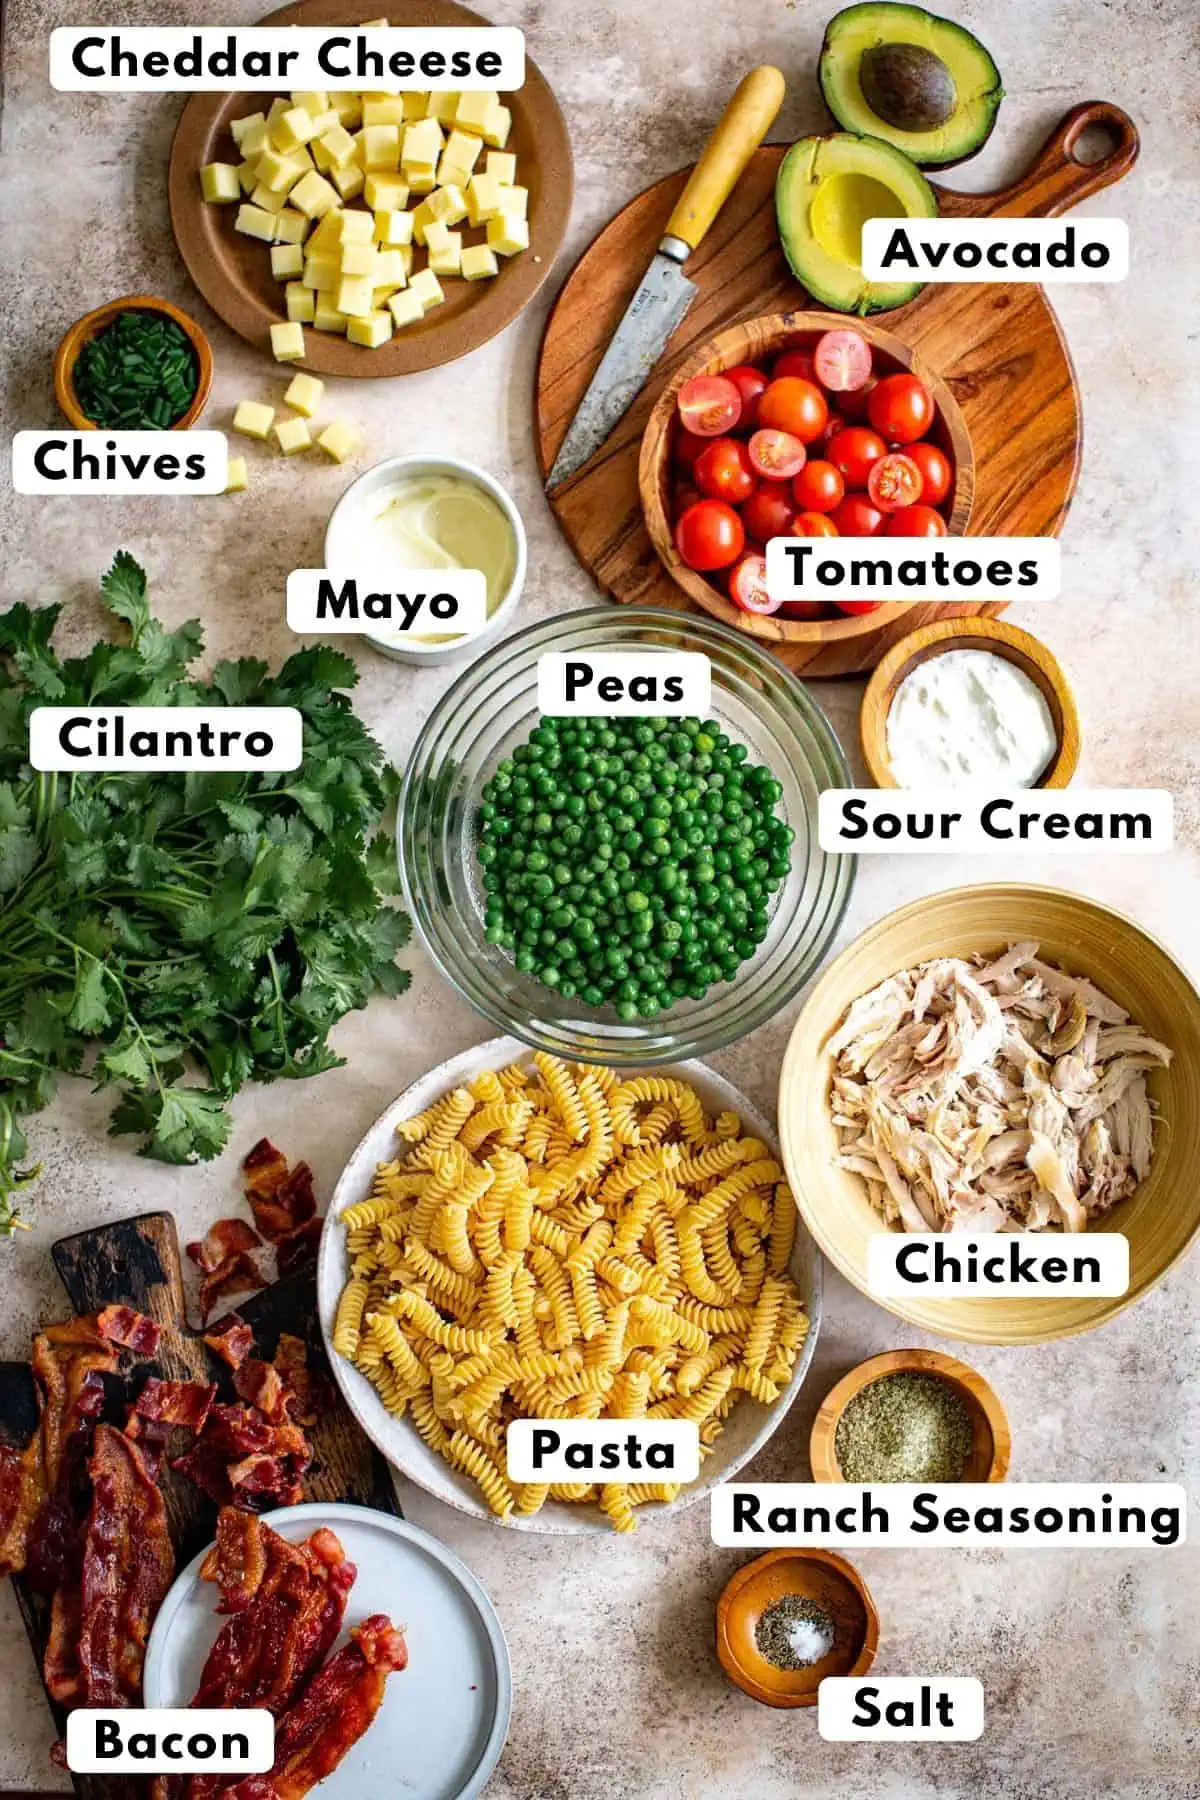 Chicken bacon ranch pasta salad ingredients.